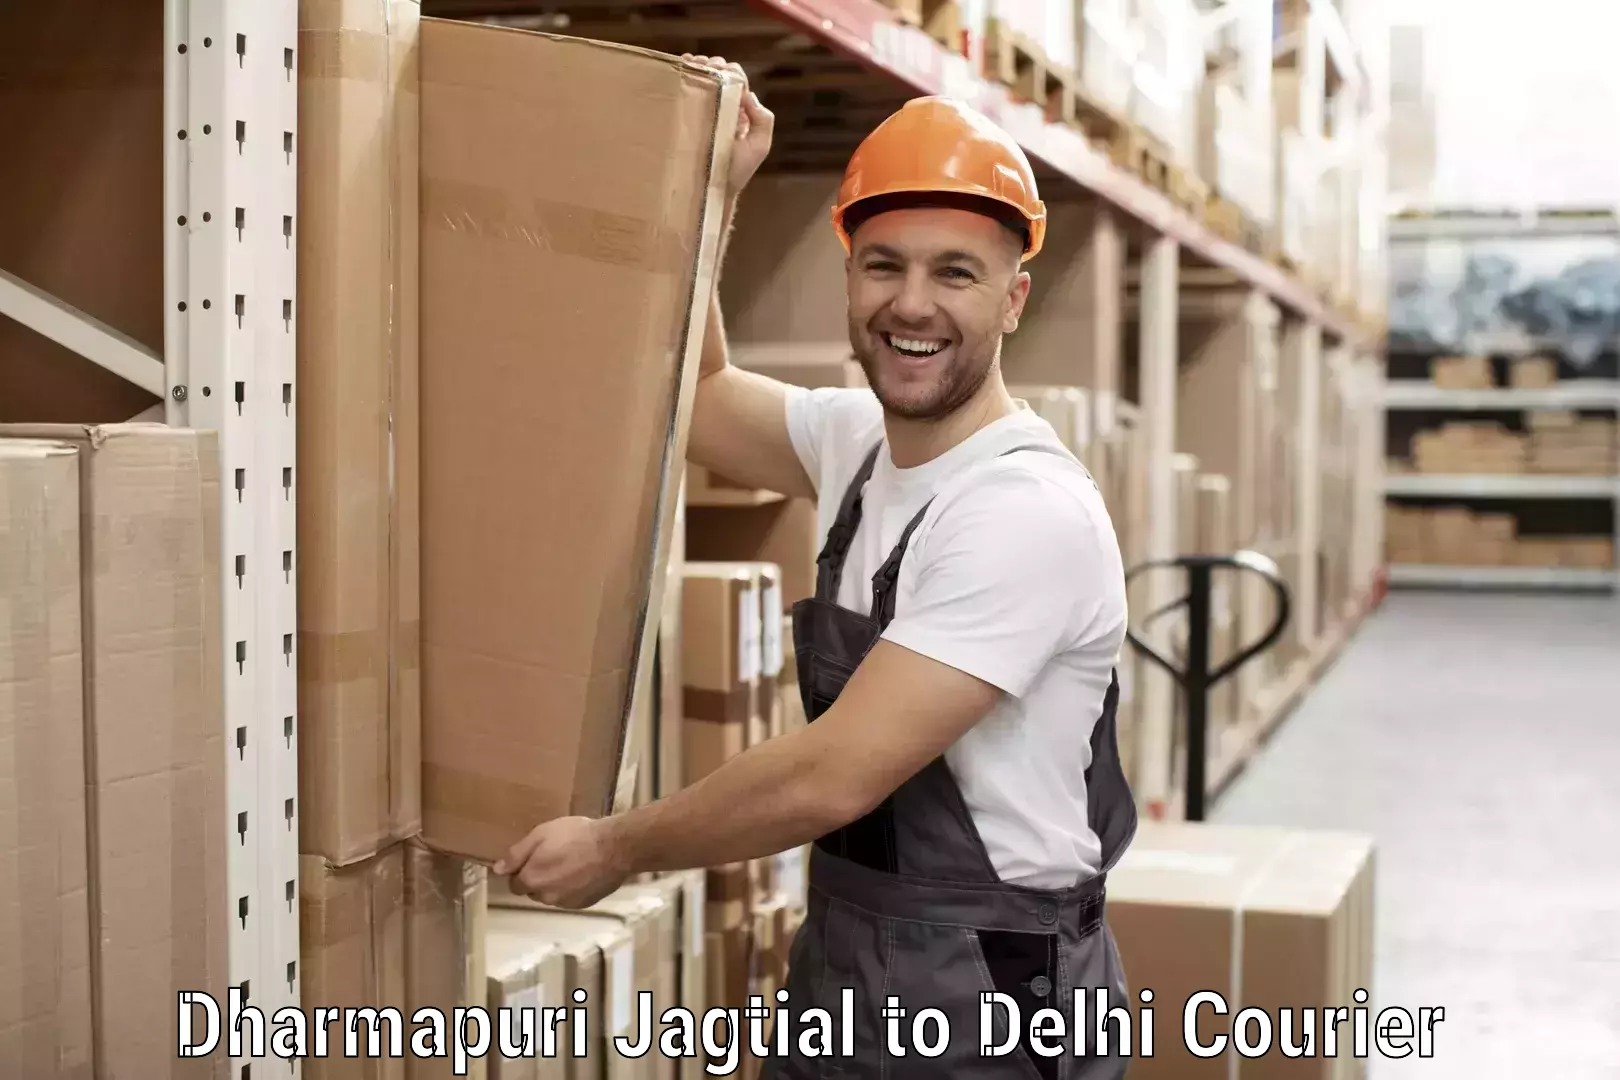 Advanced delivery network Dharmapuri Jagtial to East Delhi